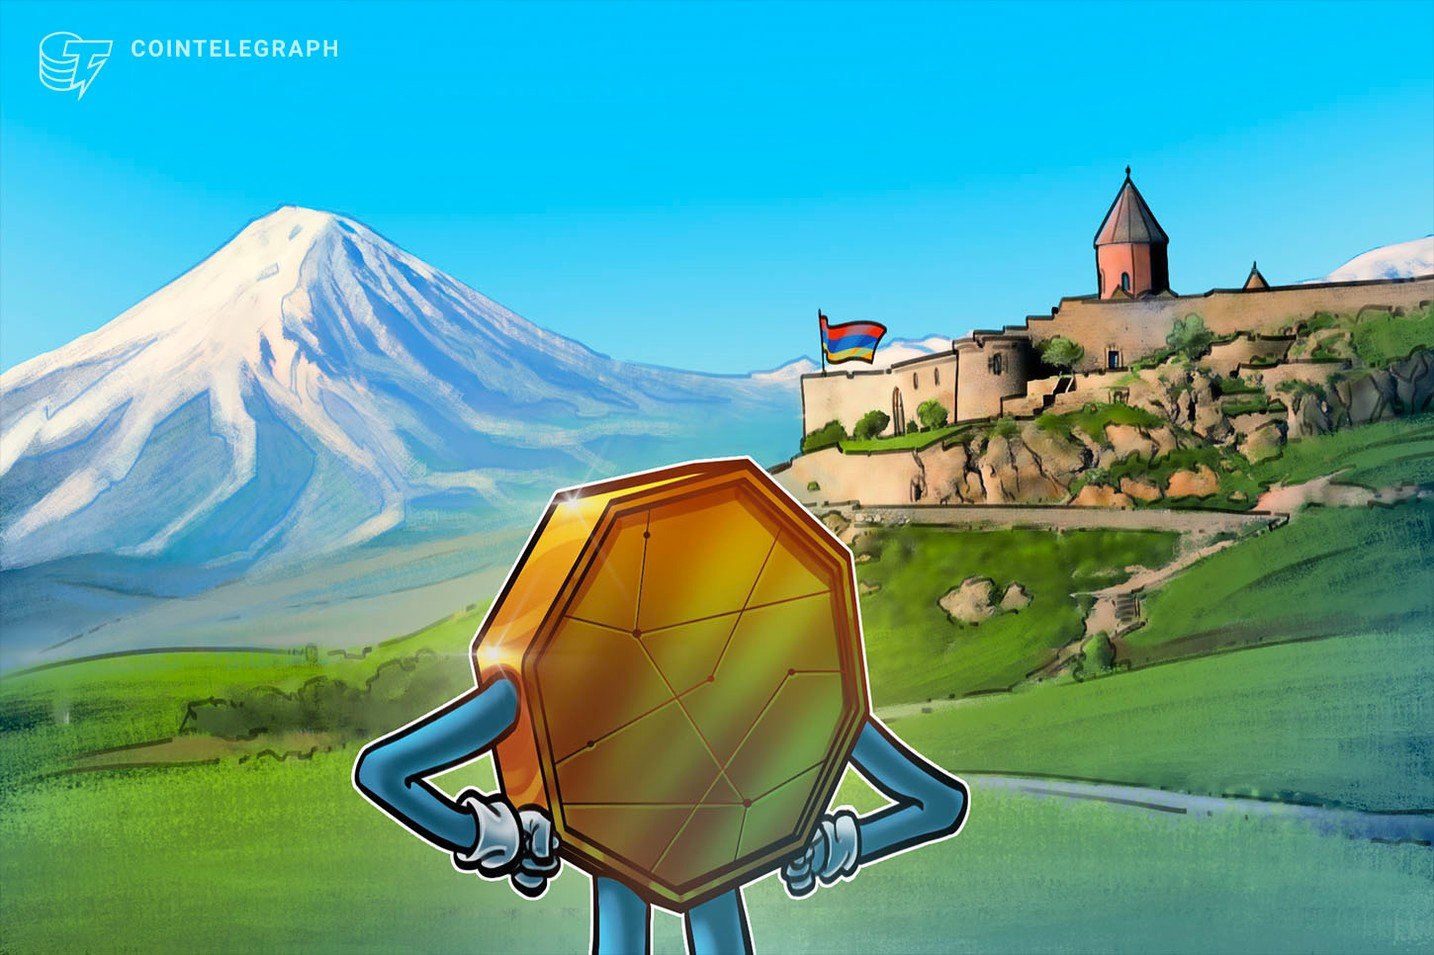 Armenian cultural heritage sites tokenized on Solana blockchain